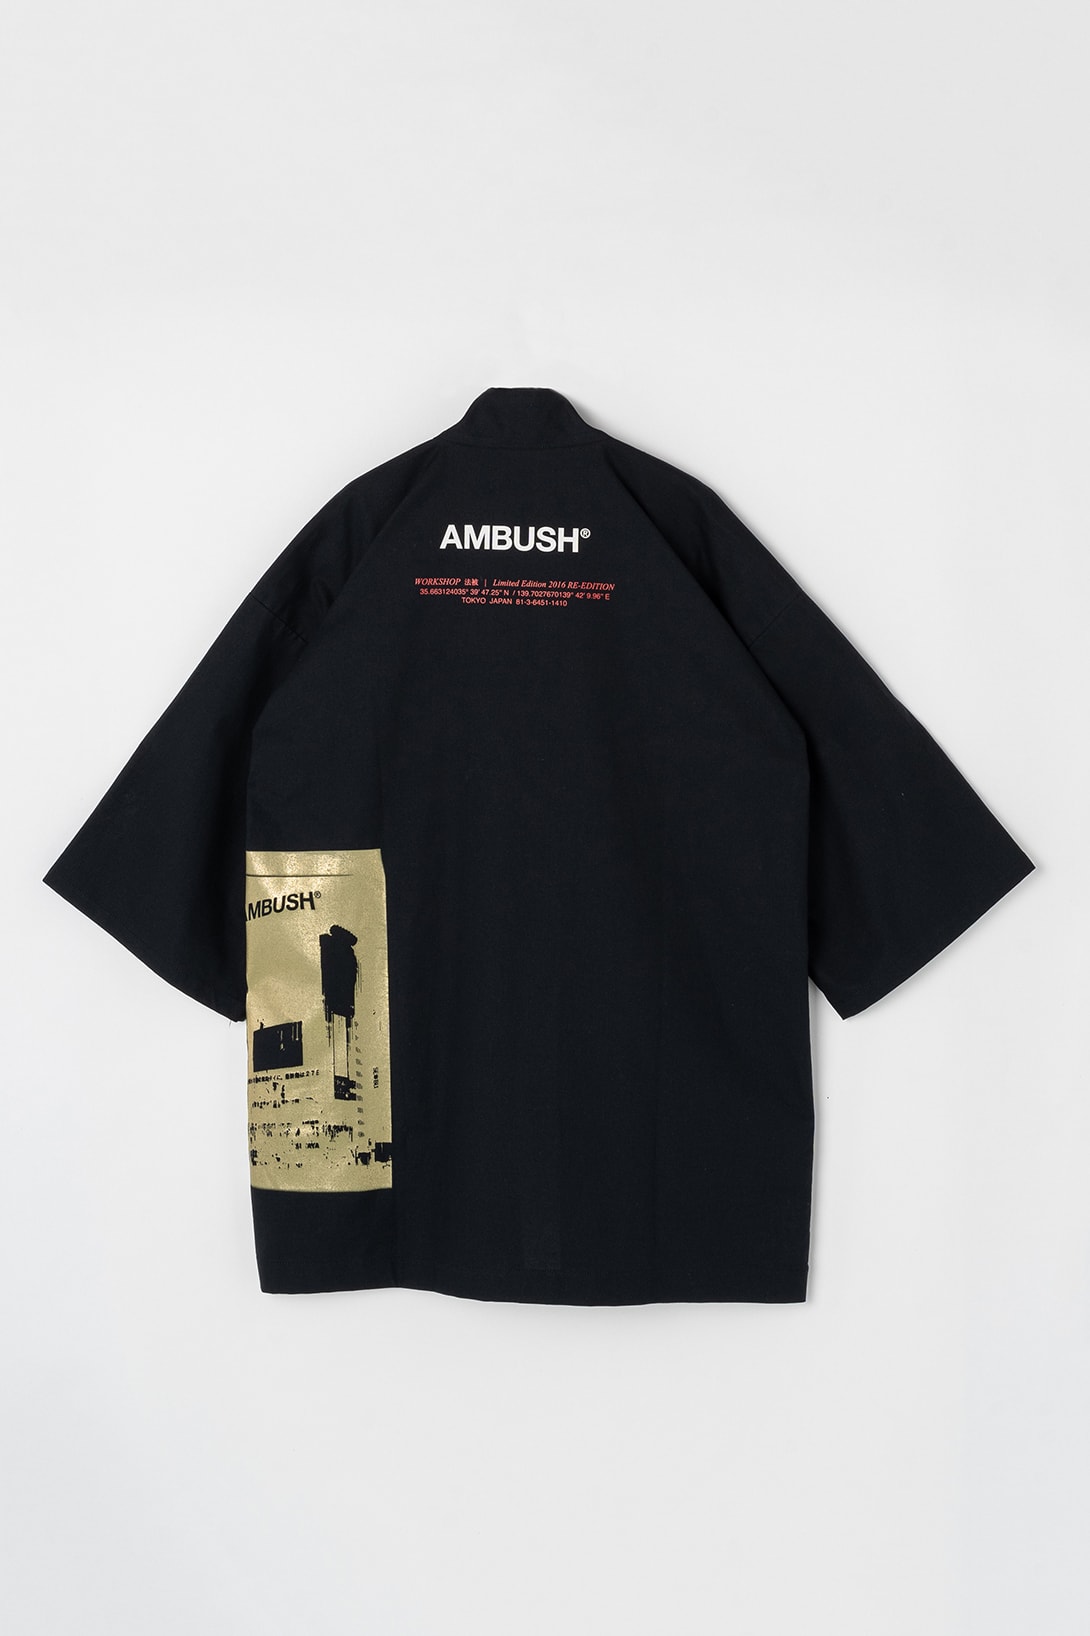 AMBUSH Anniversary Capsule Collection Lighter Case Fan Apparel Shirt